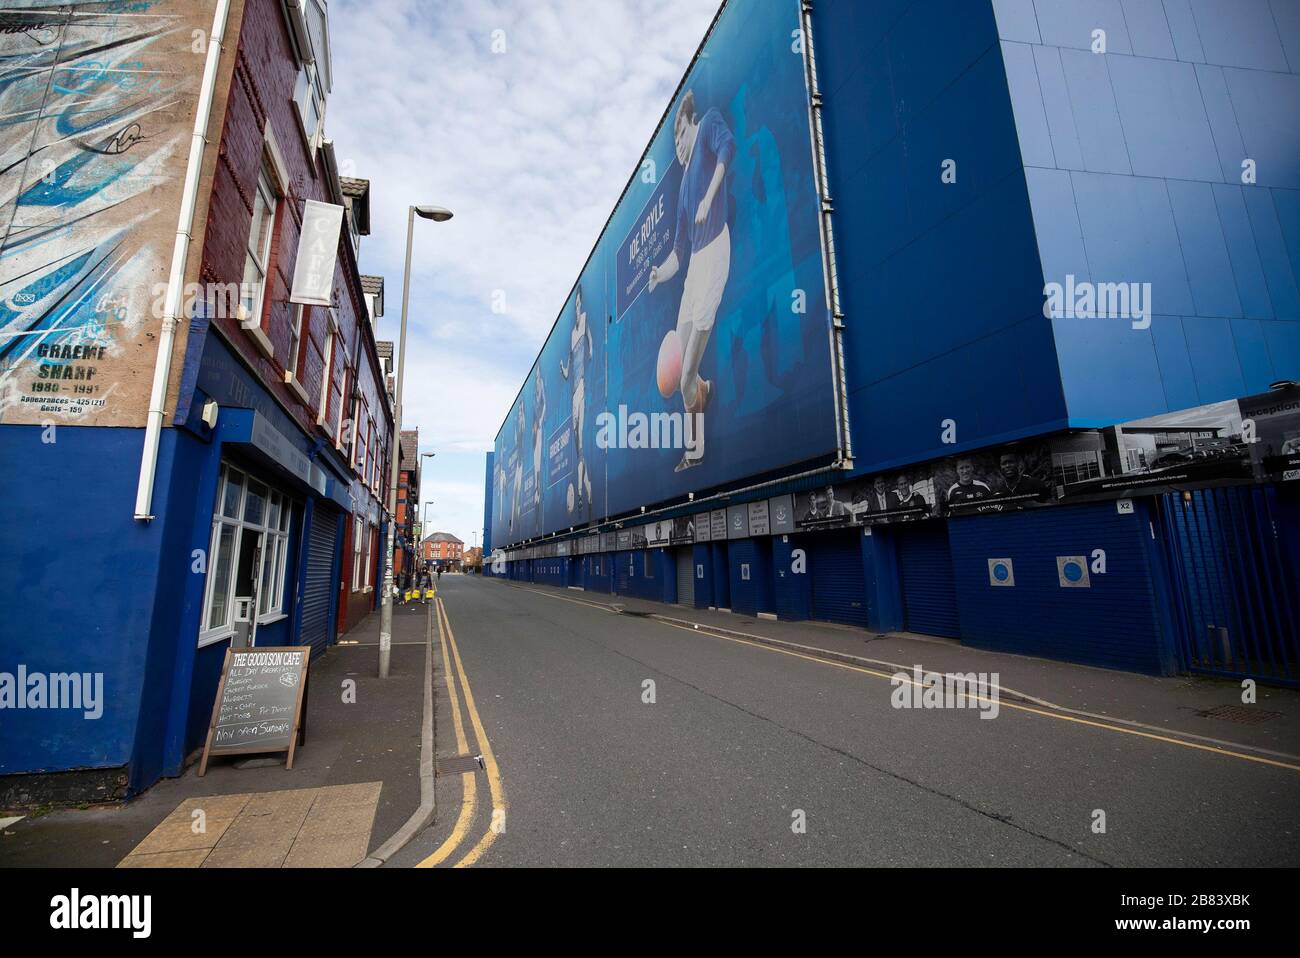 Everton Football Club und Umgebung während des Coronavirus Ausbruchs Stockfoto